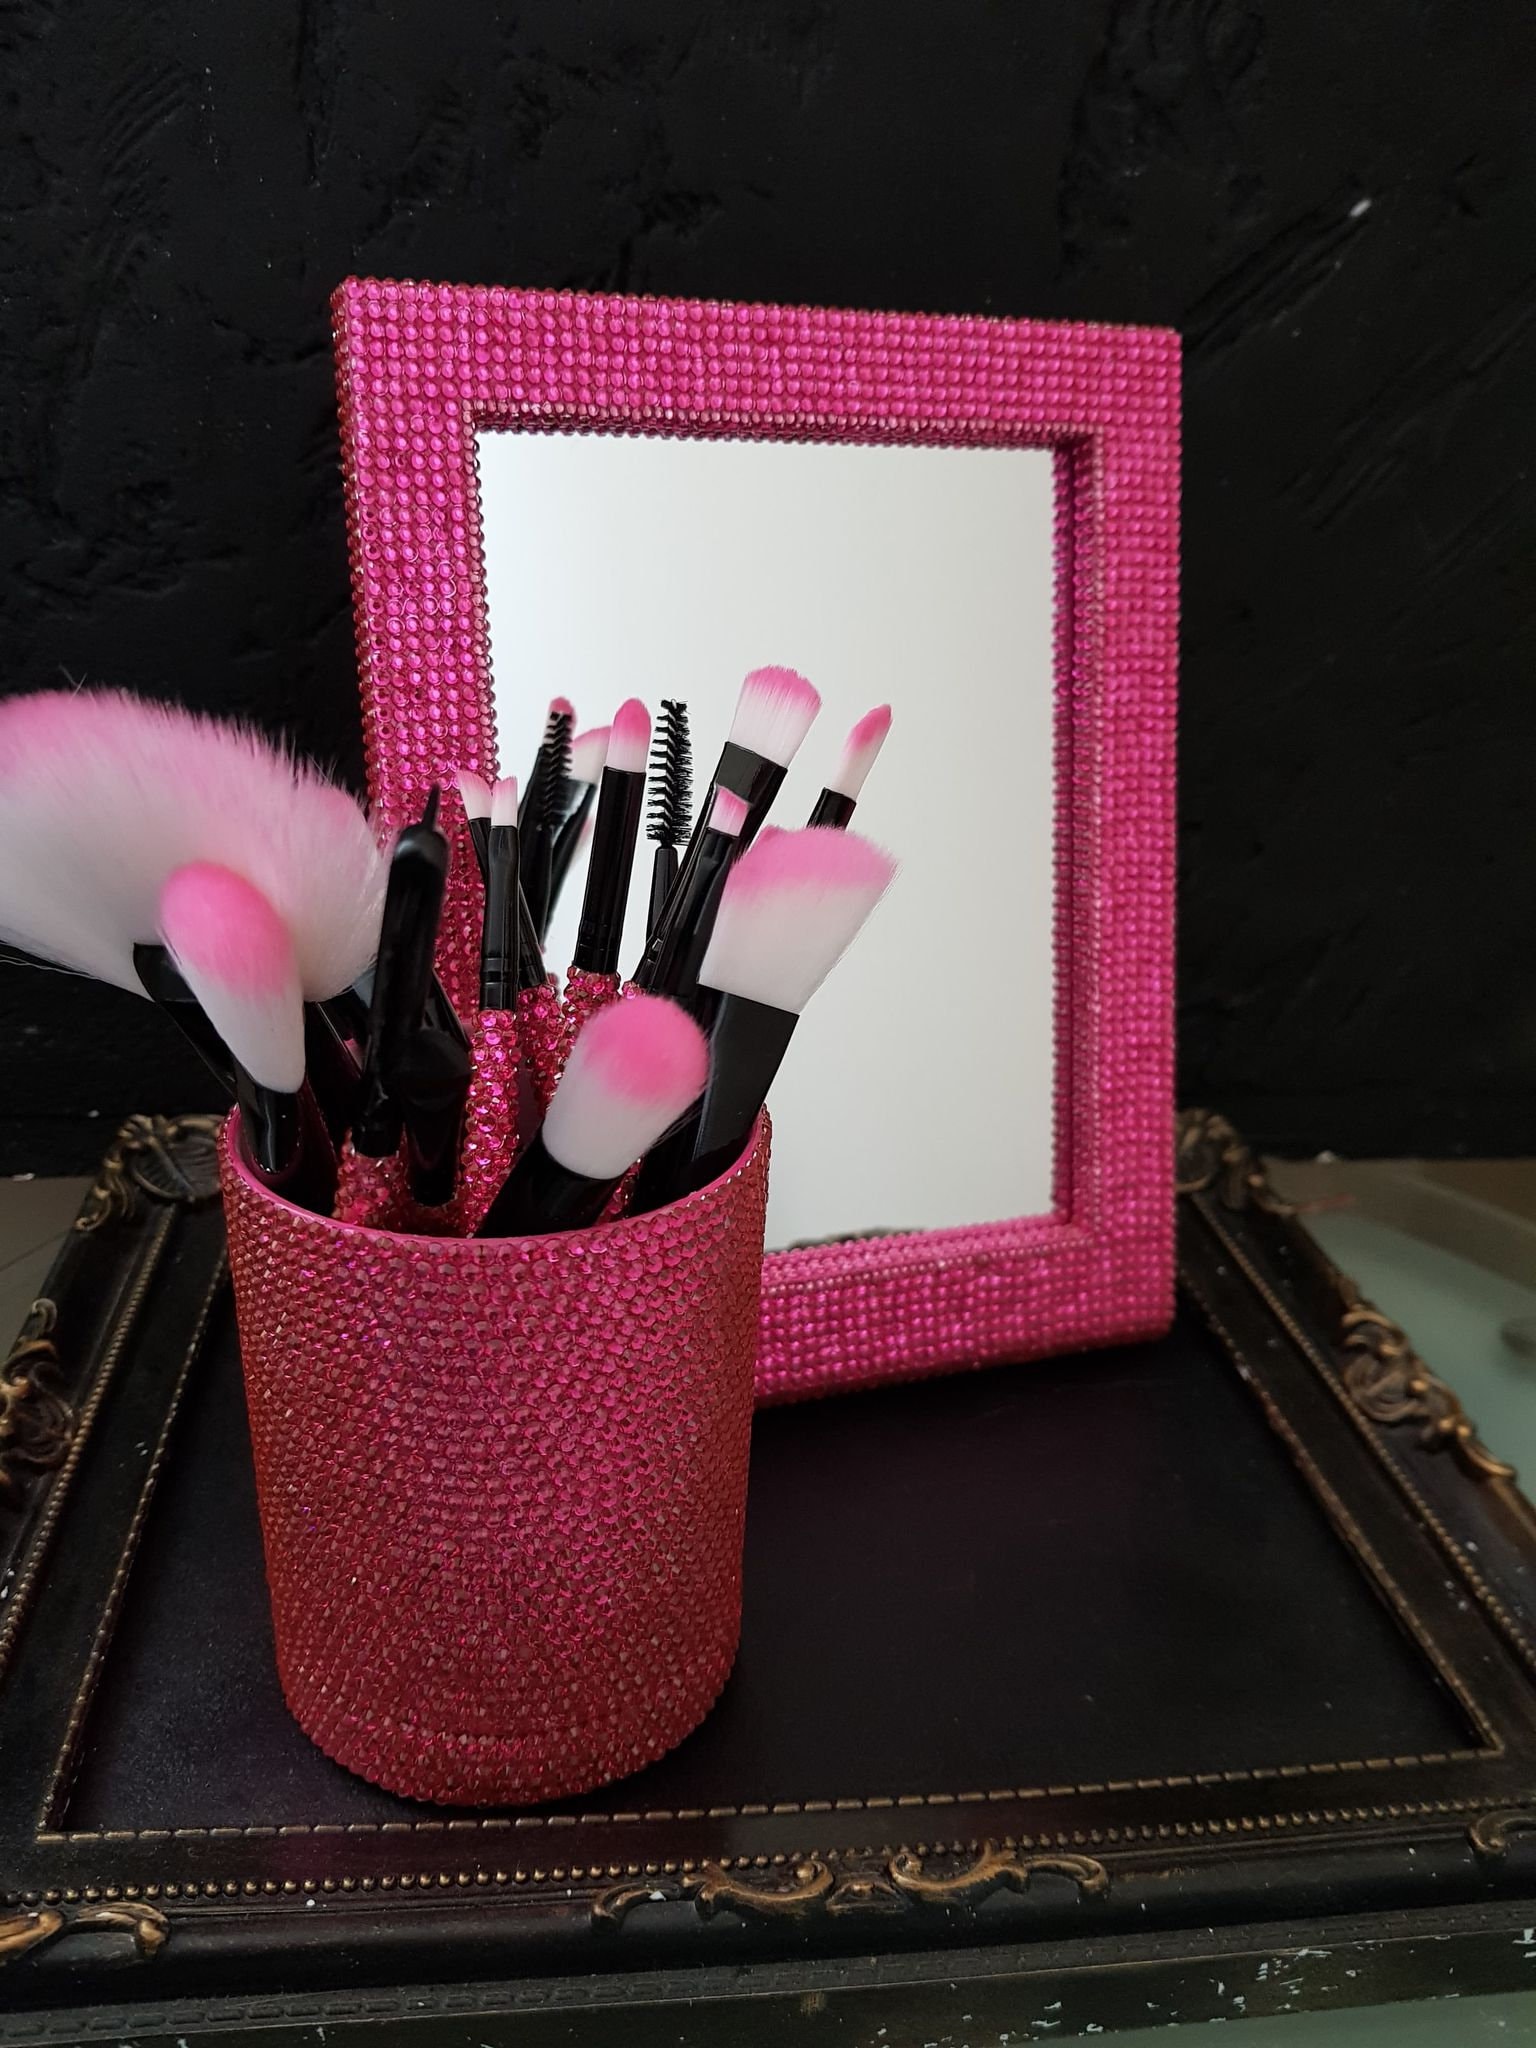 15 Stück Bling Crystal Schillernde Make-Up Pinsel Set + Halter Makeup Spiegel Fertig Als Geschenk von LovelyBoutiqueGB